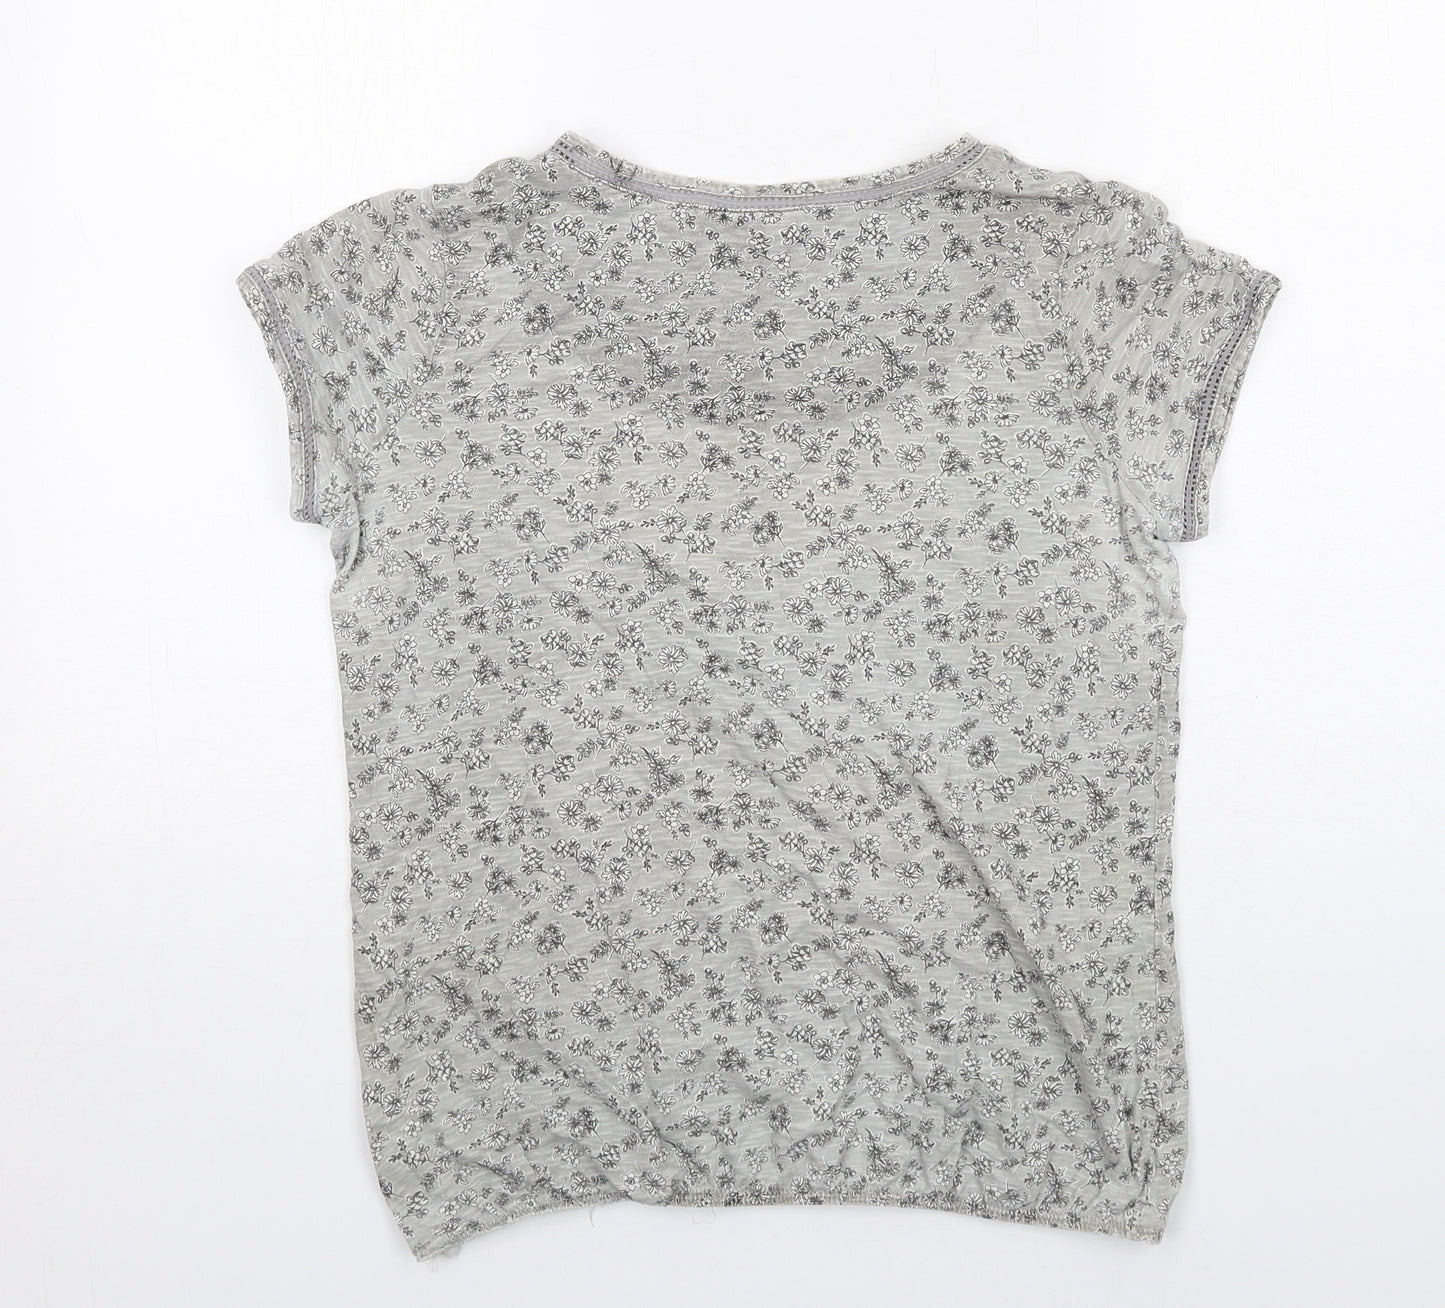 NEXT Womens Grey Floral Cotton Basic T-Shirt Size 12 Round Neck